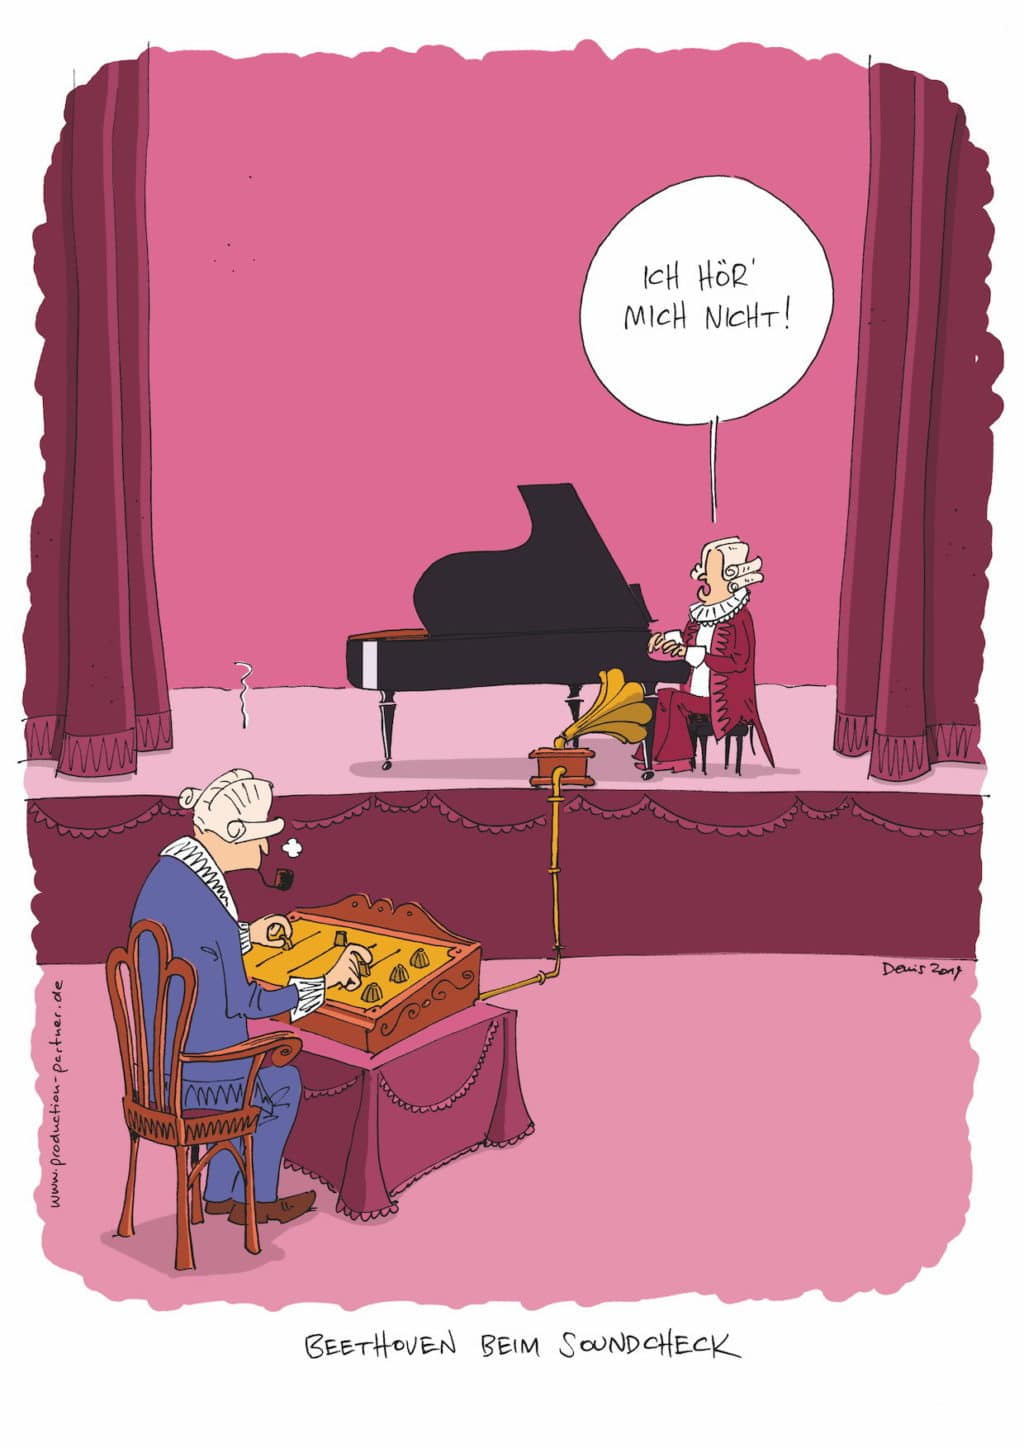 Beethoven beim Soundcheck